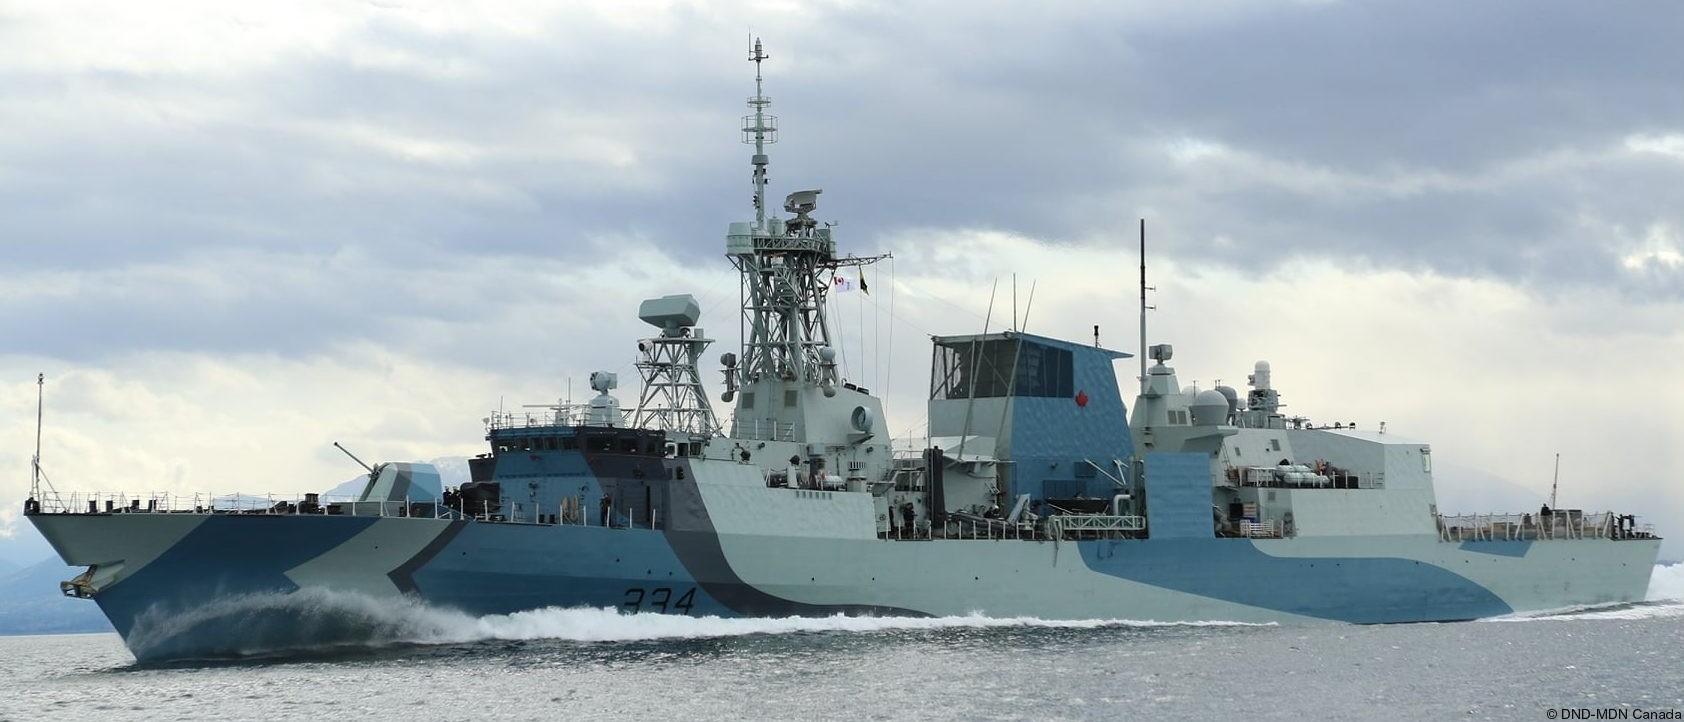 ffh-334 hmcs regina halifax class helicopter patrol frigate ncsm royal canadian navy 63